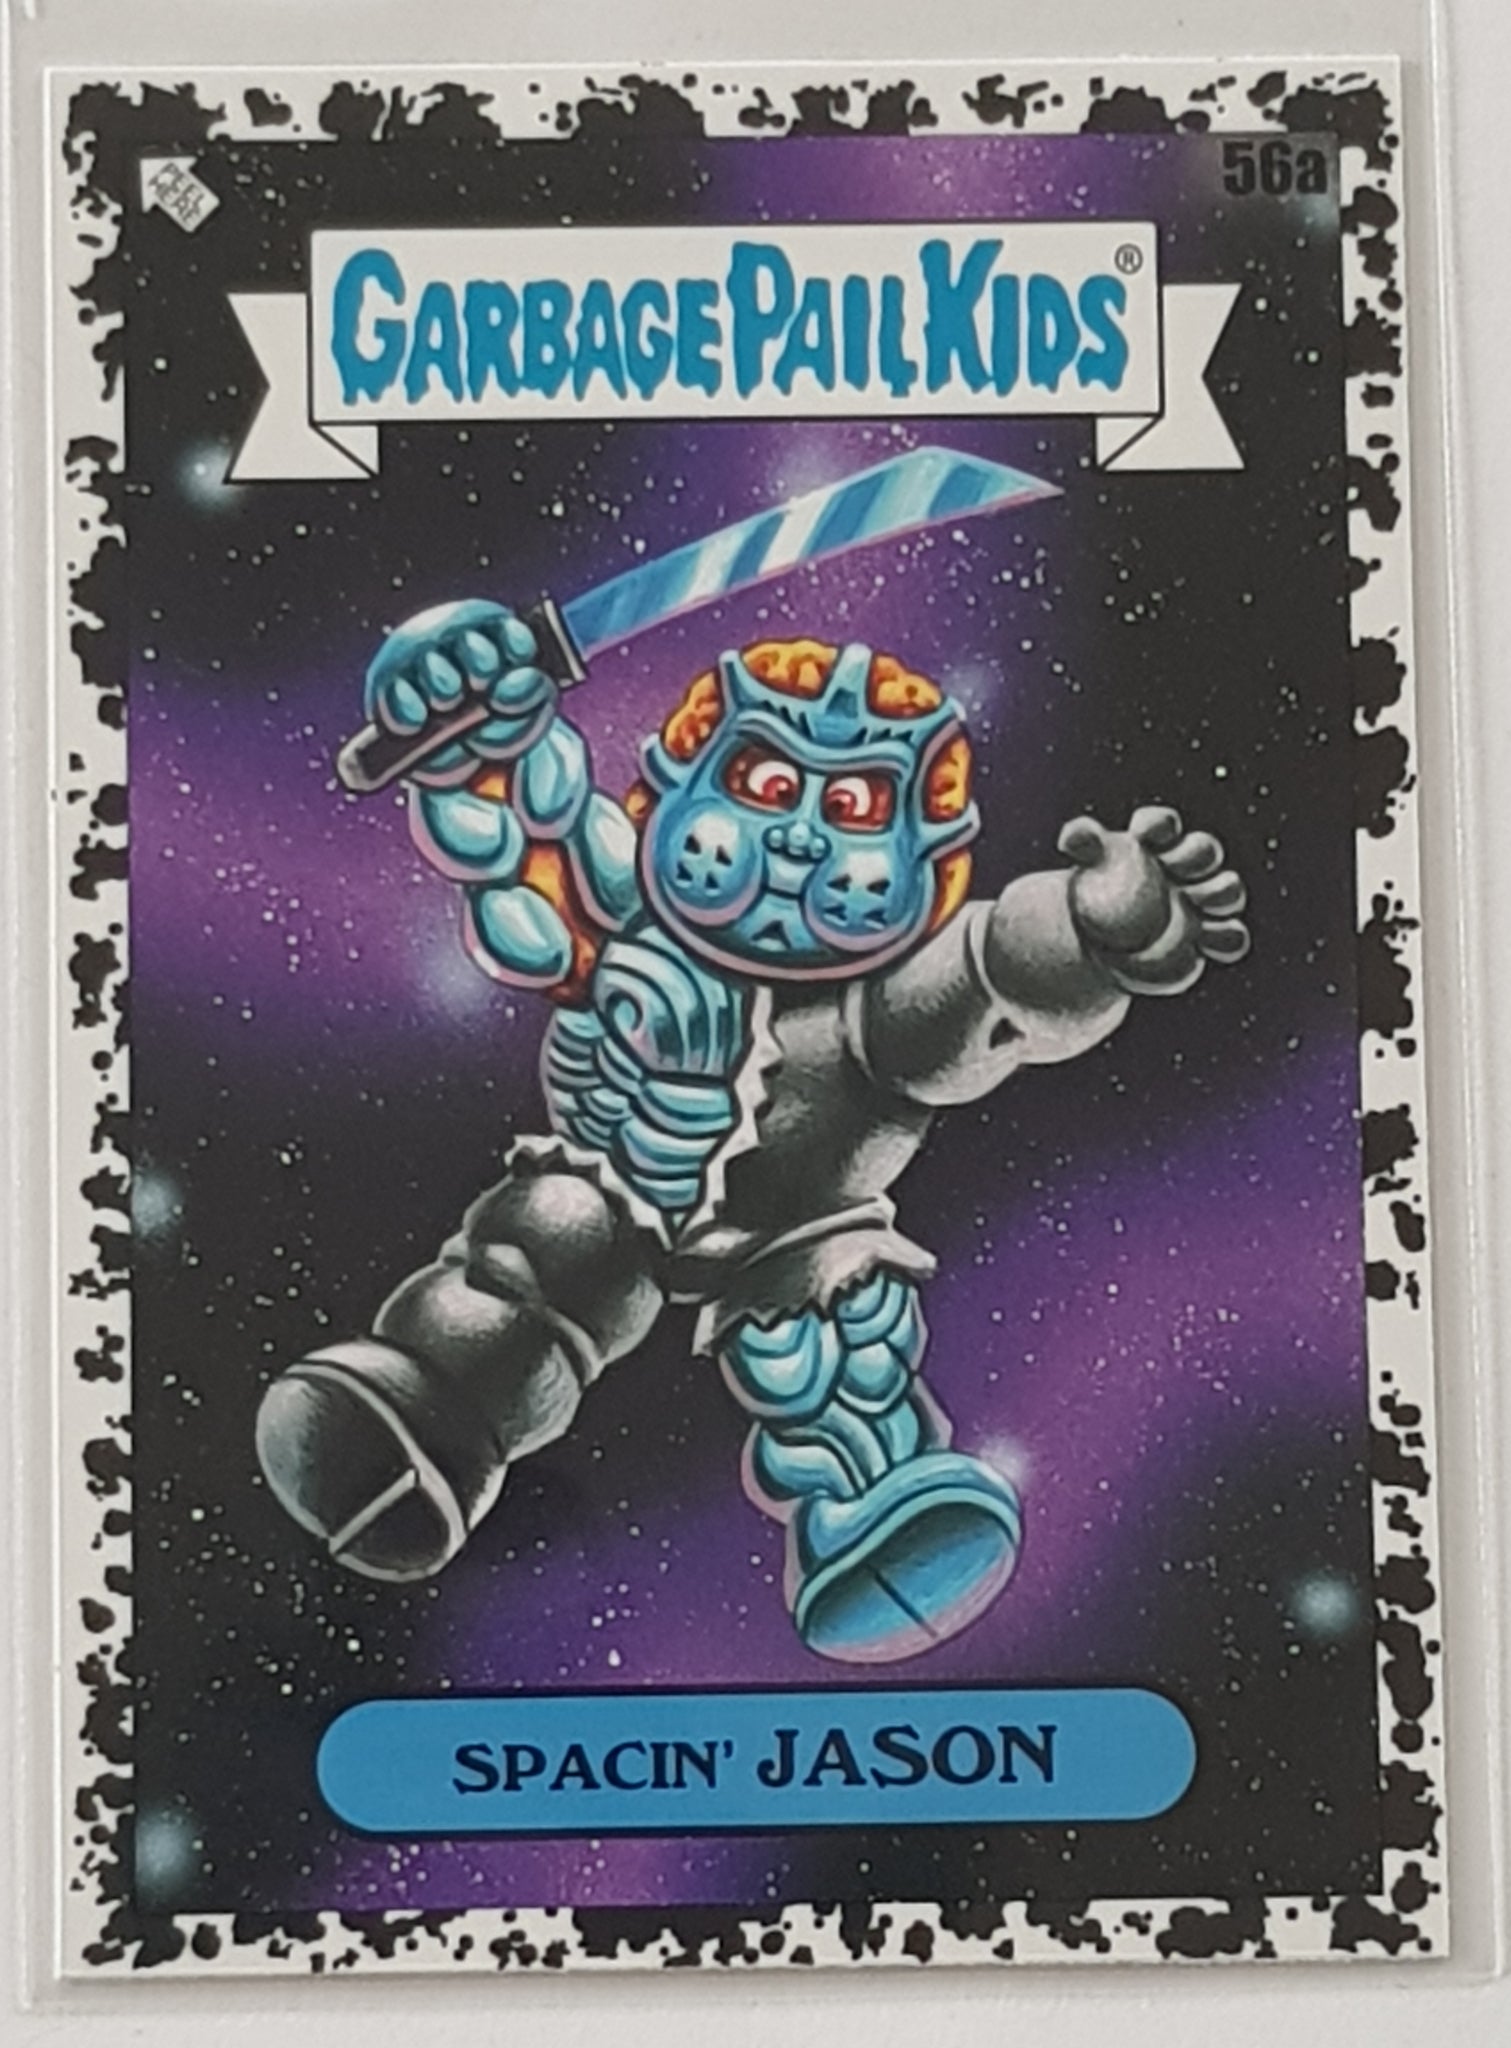 Garbage Pail Kids Intergoolactic Mayhem Spacin' Jason #56a Black Hole Parallel Trading Card